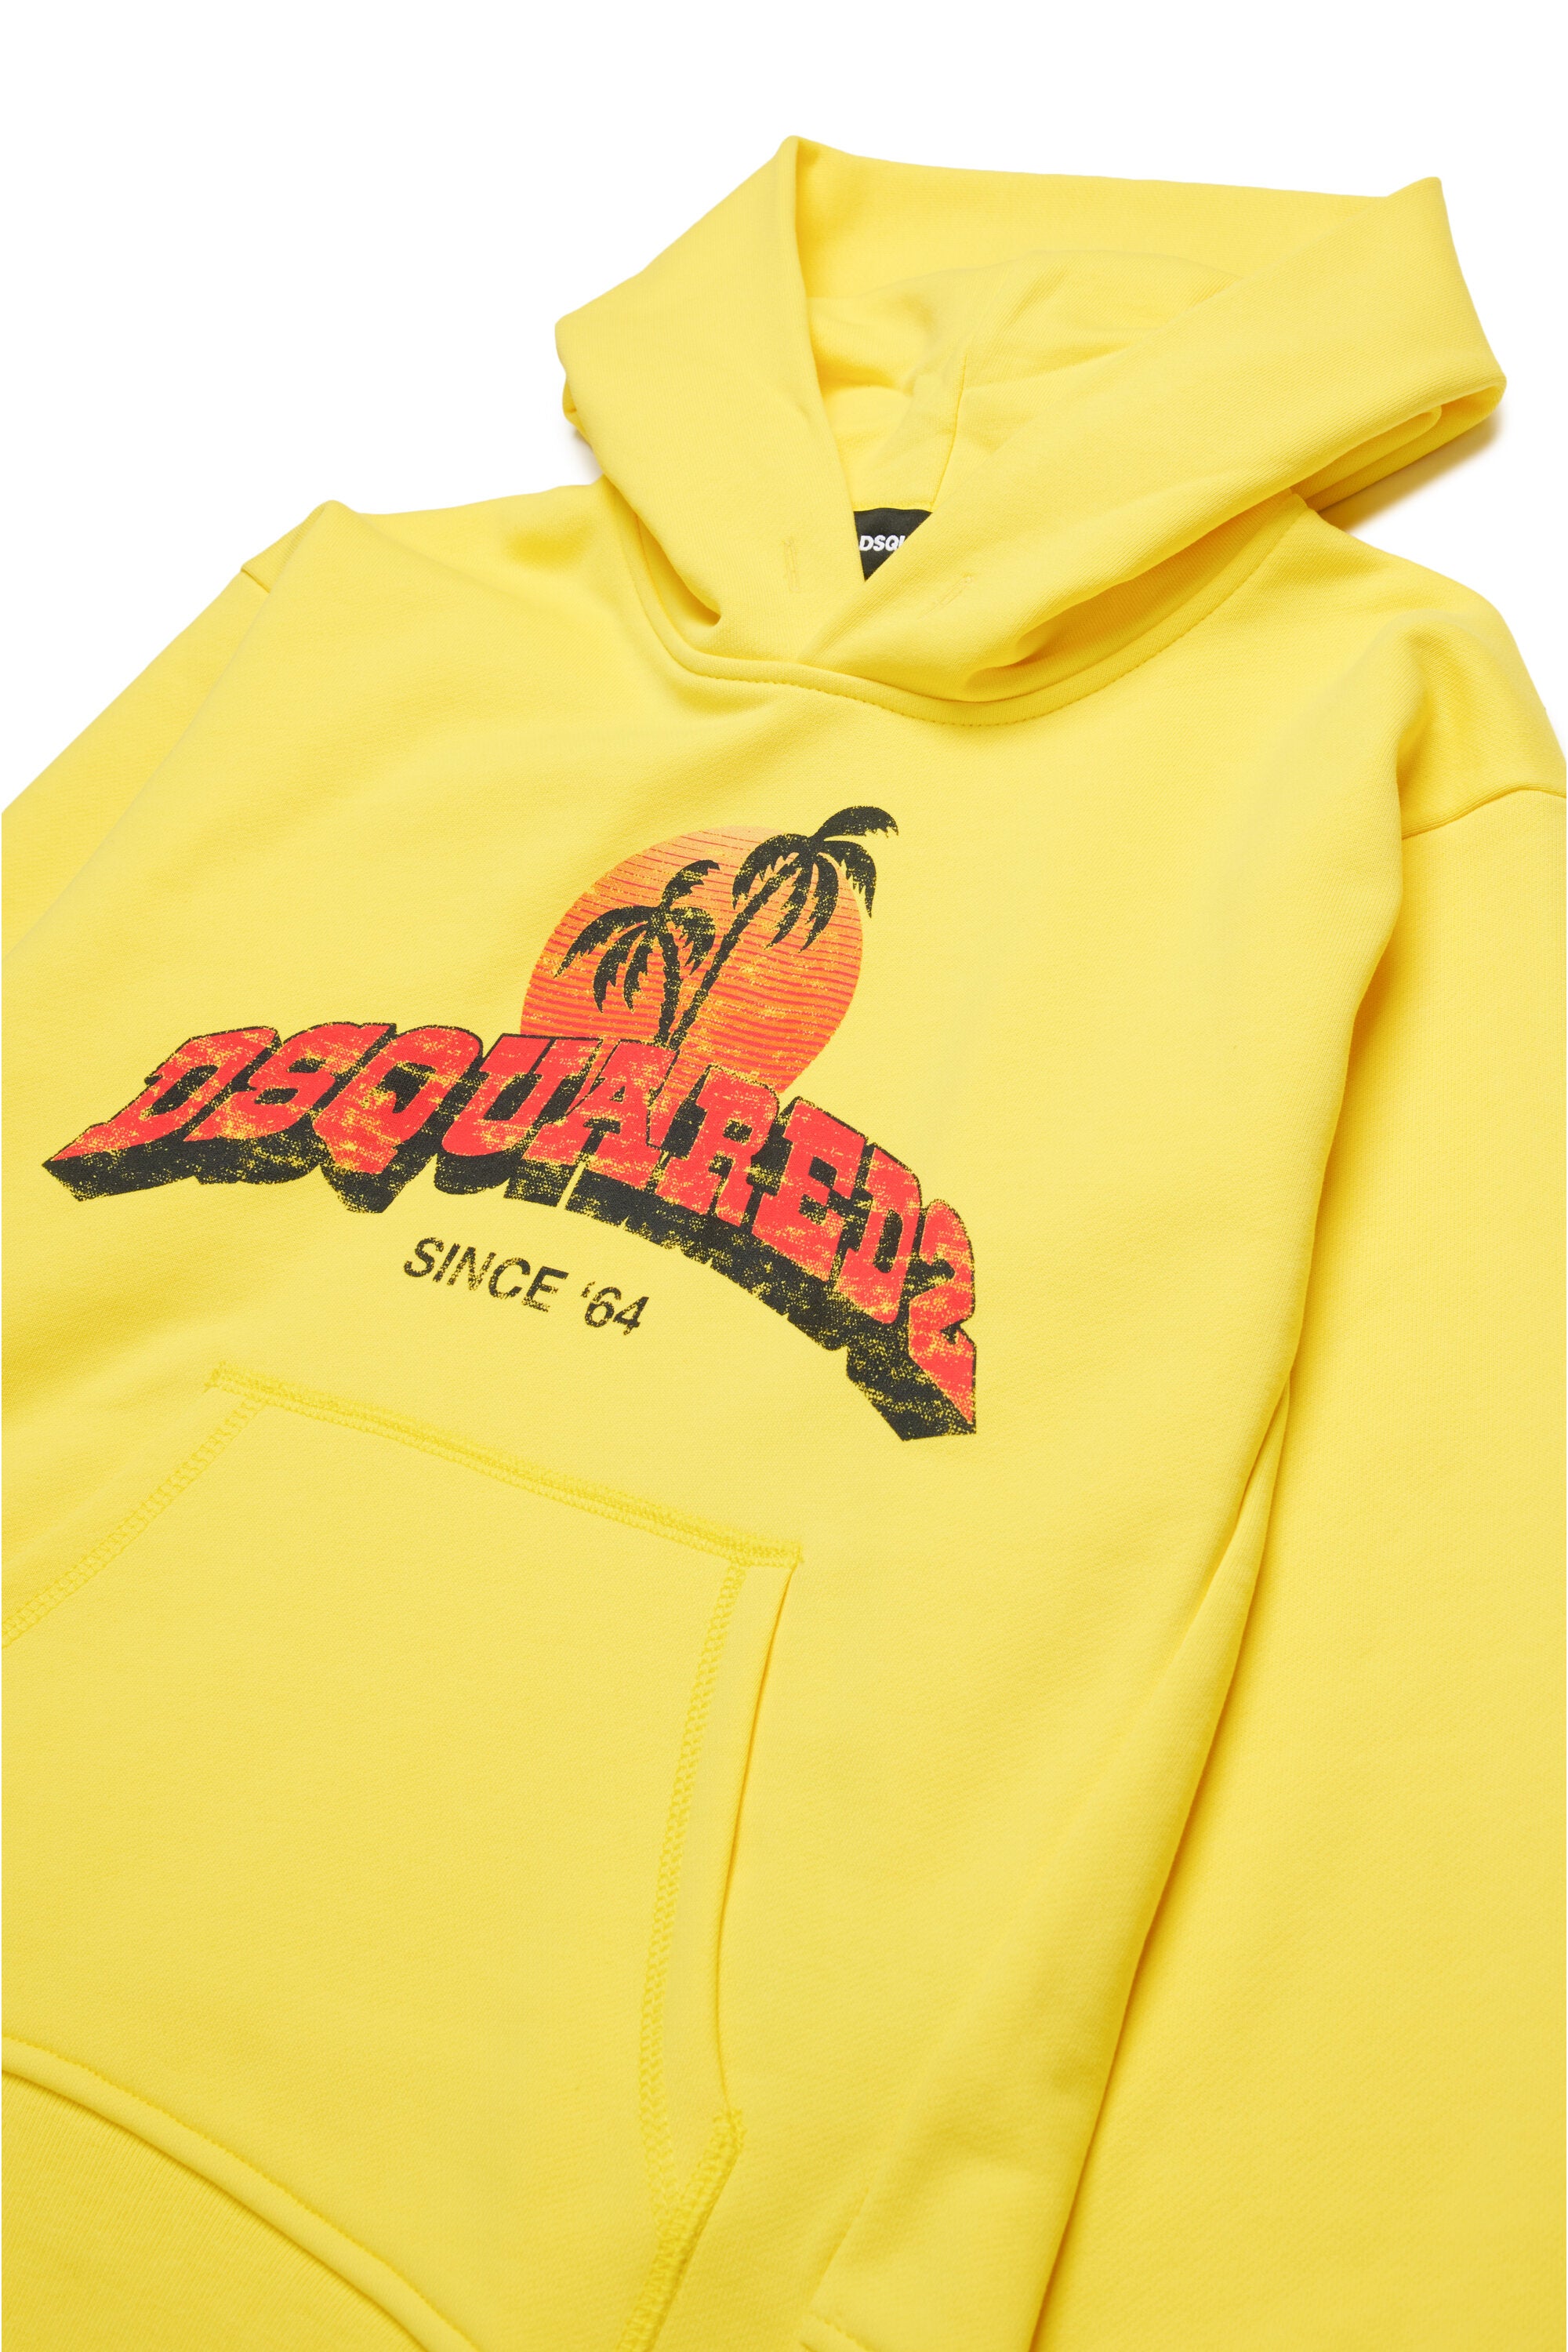 Hooded sweatshirt with Jamaica graphics